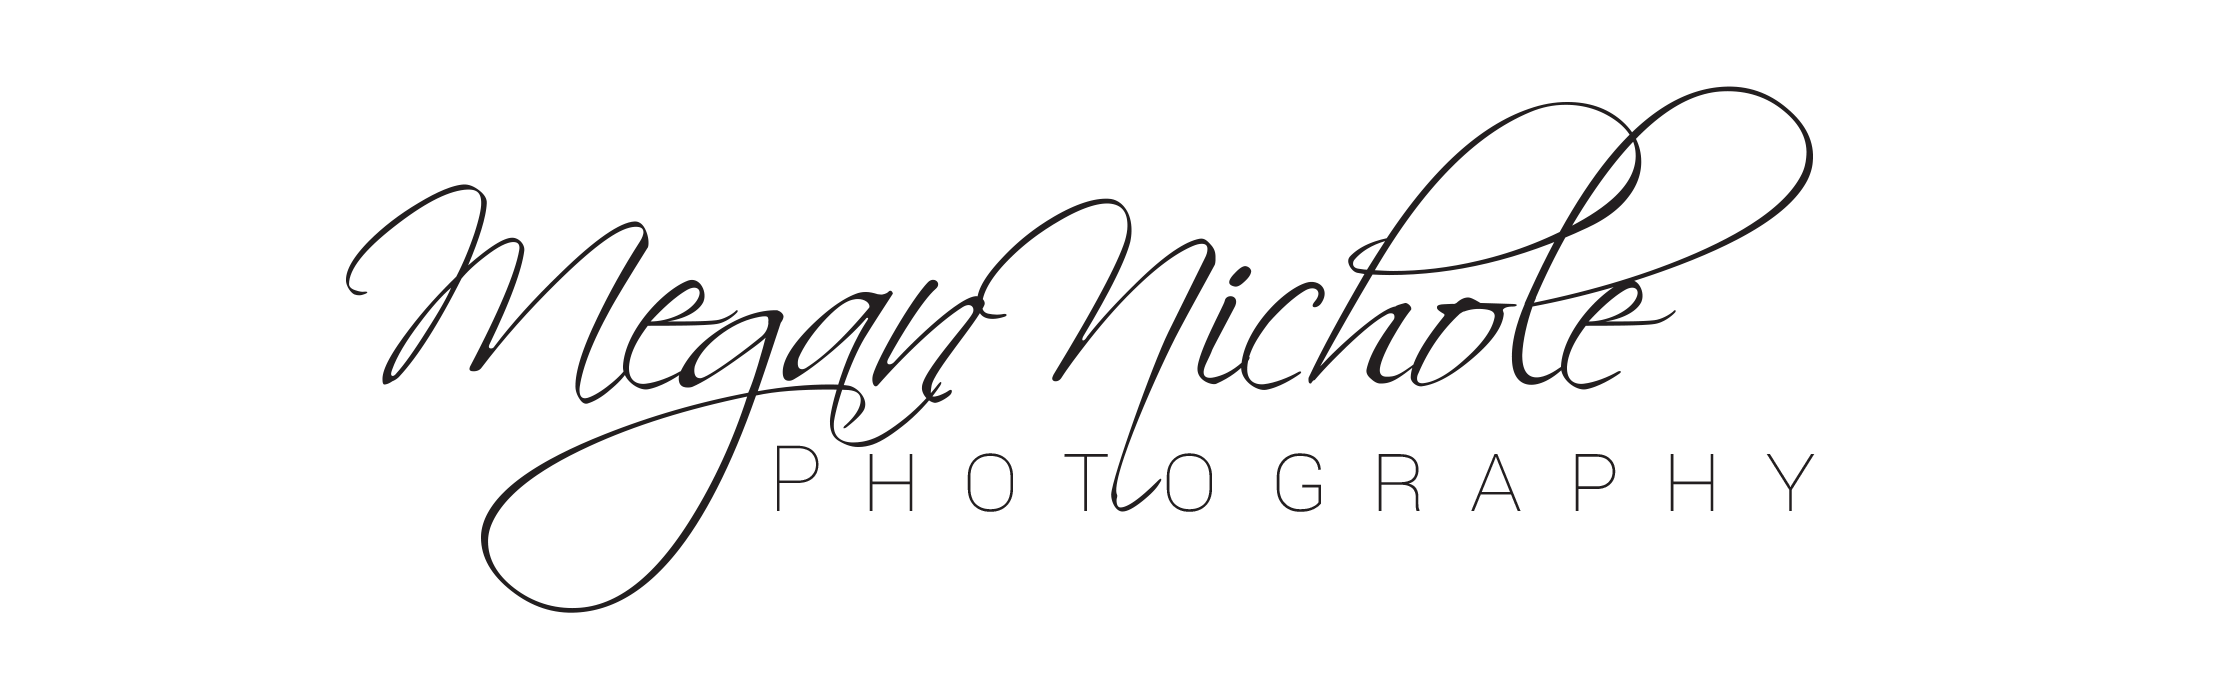 Megan Nichole Photography